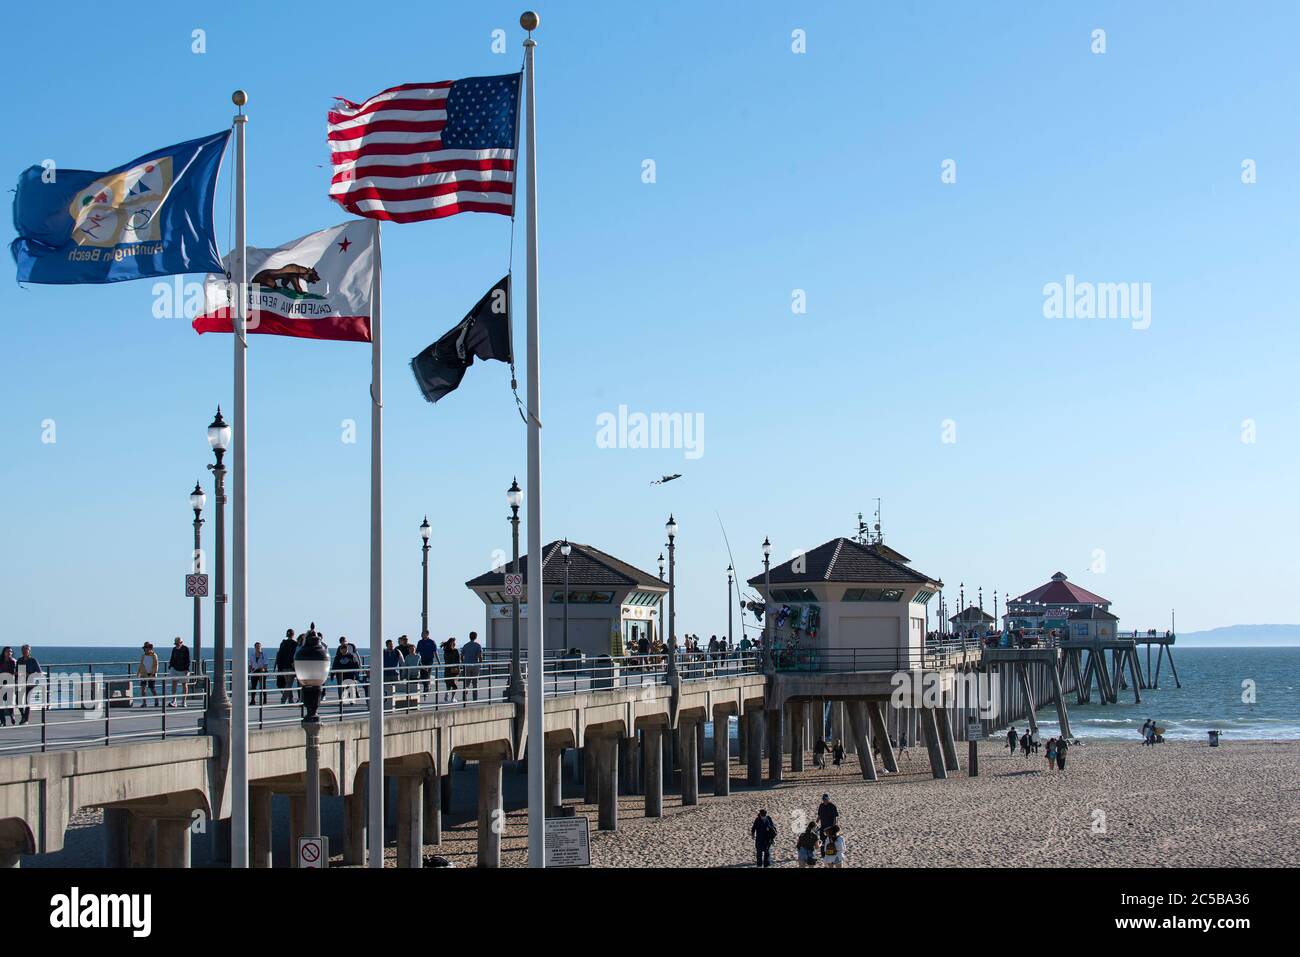 Huntington Beach, CA/USA - Marchh 14, 2019: Tourists enjoying the Huntington Beach Pier on a sunny beautiful spring day Stock Photo